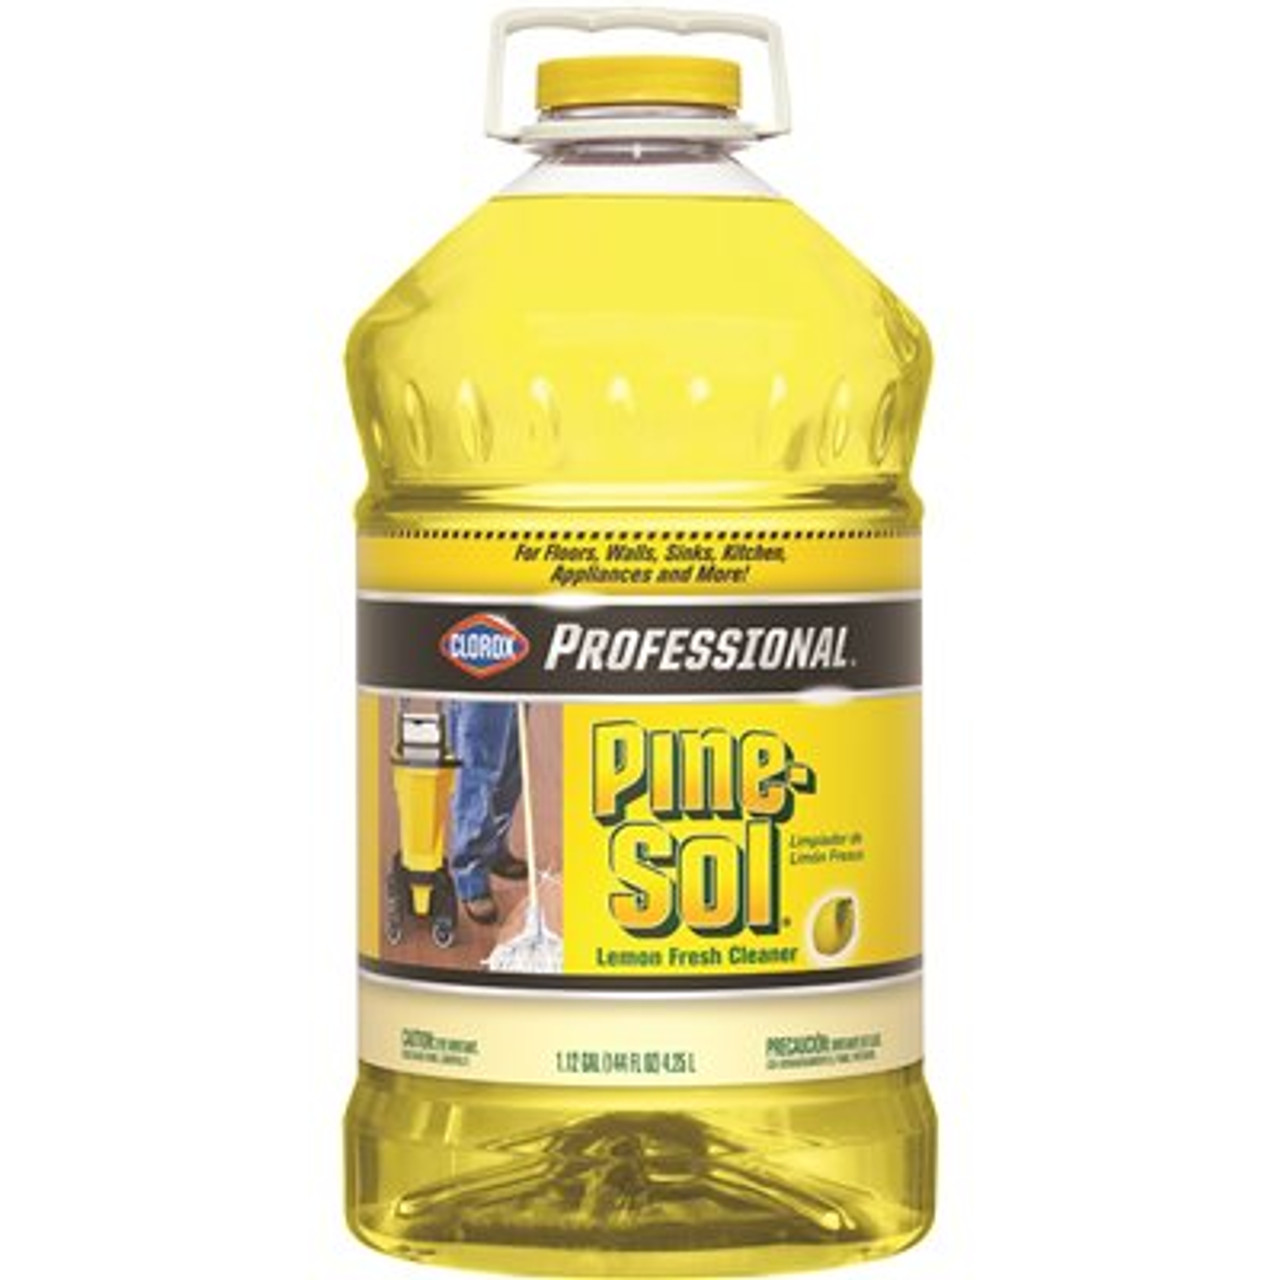 PINE-SOL Professional Multi-Surface Cleaner Lemon Fresh Case Of 3